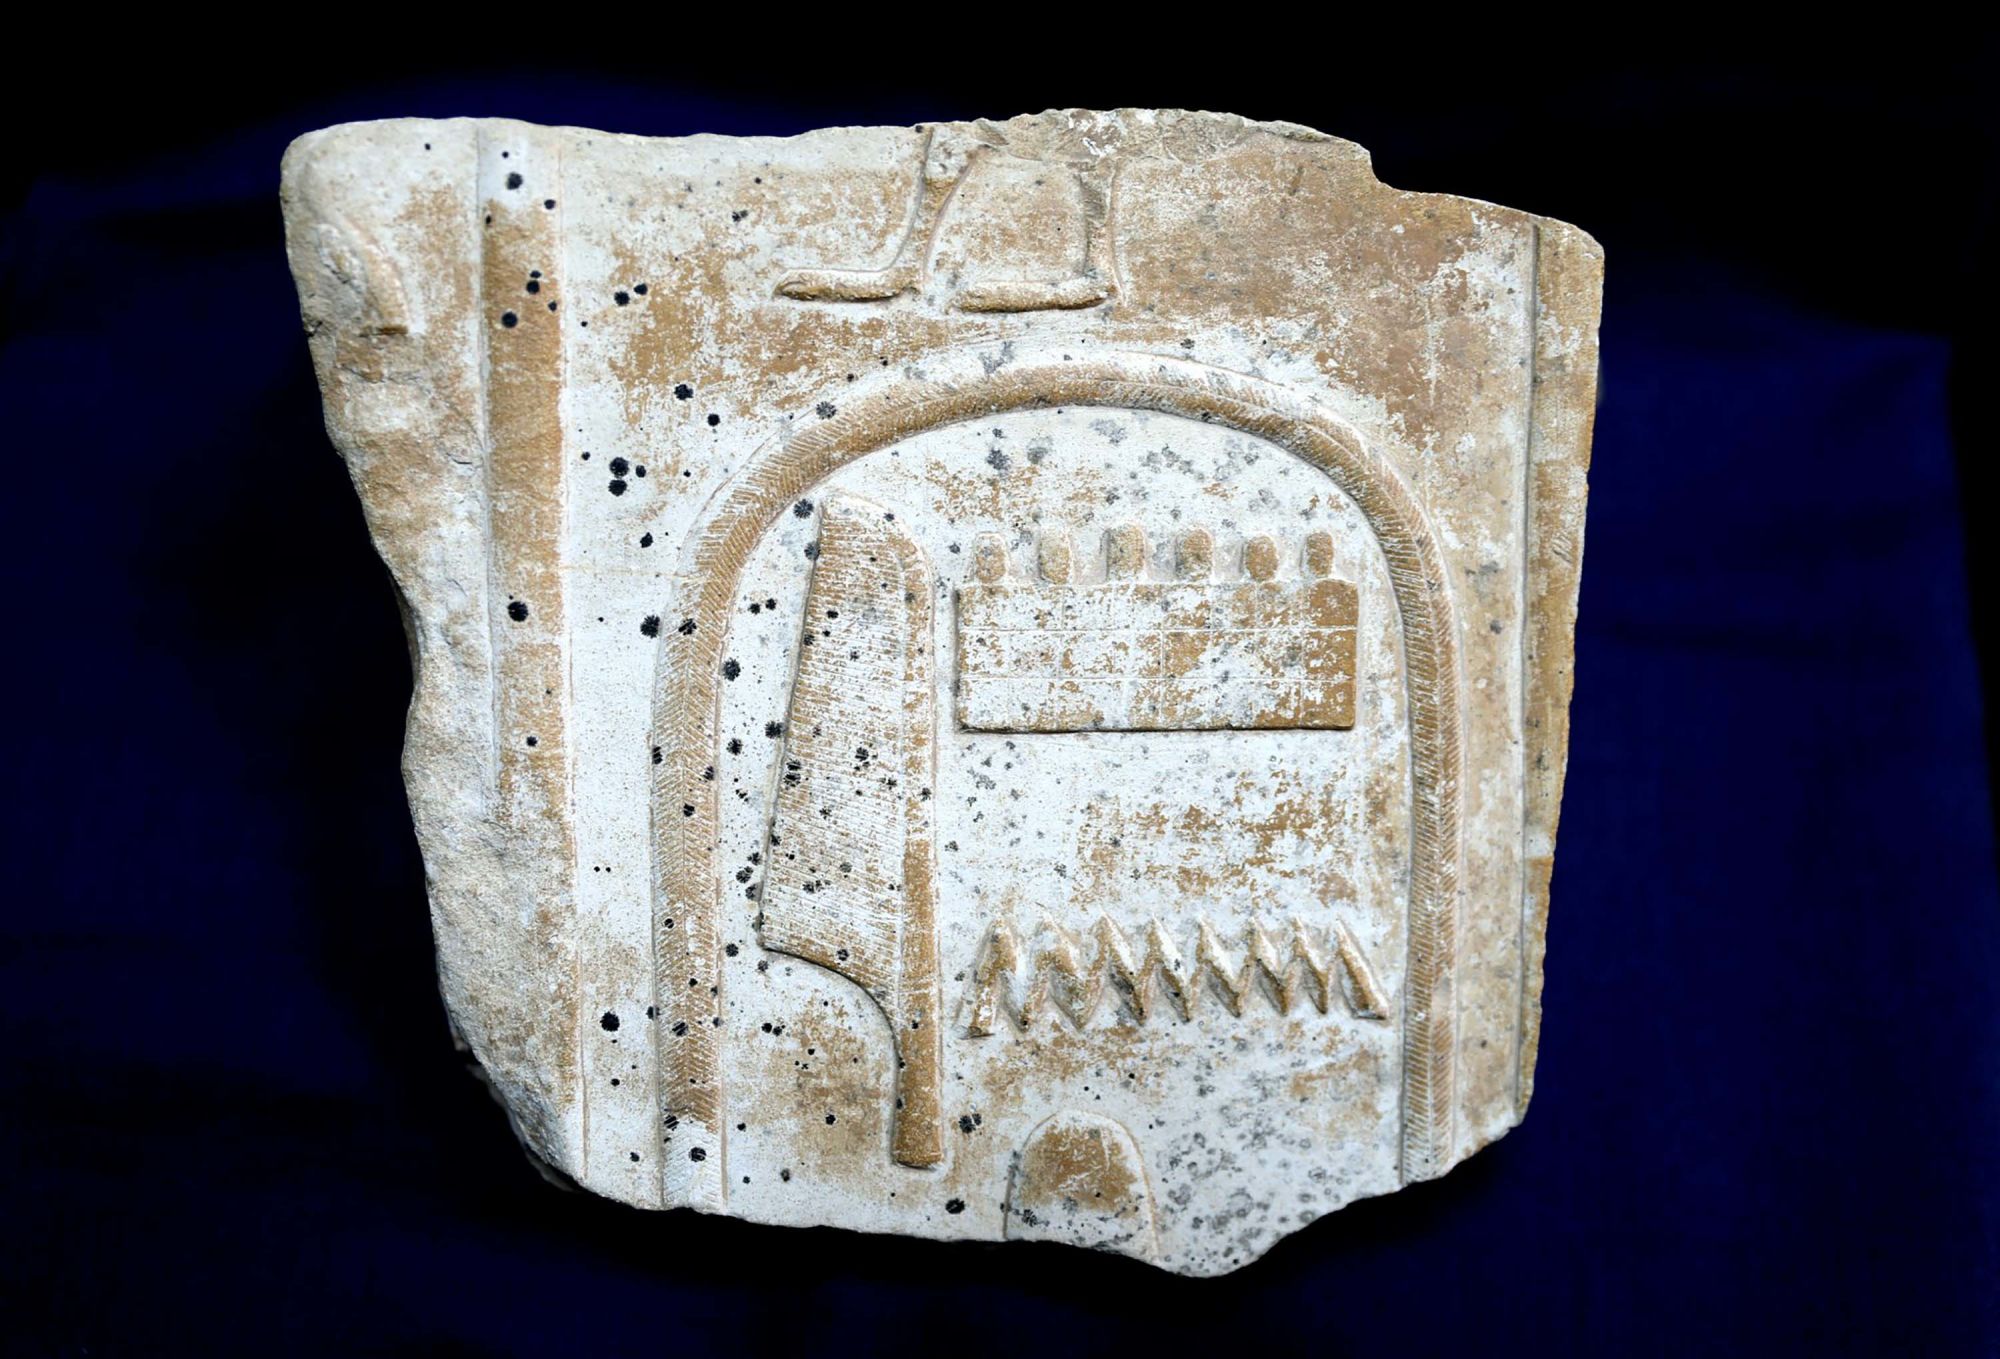 02 Egypt stolen artifact recovered scli intl FILE